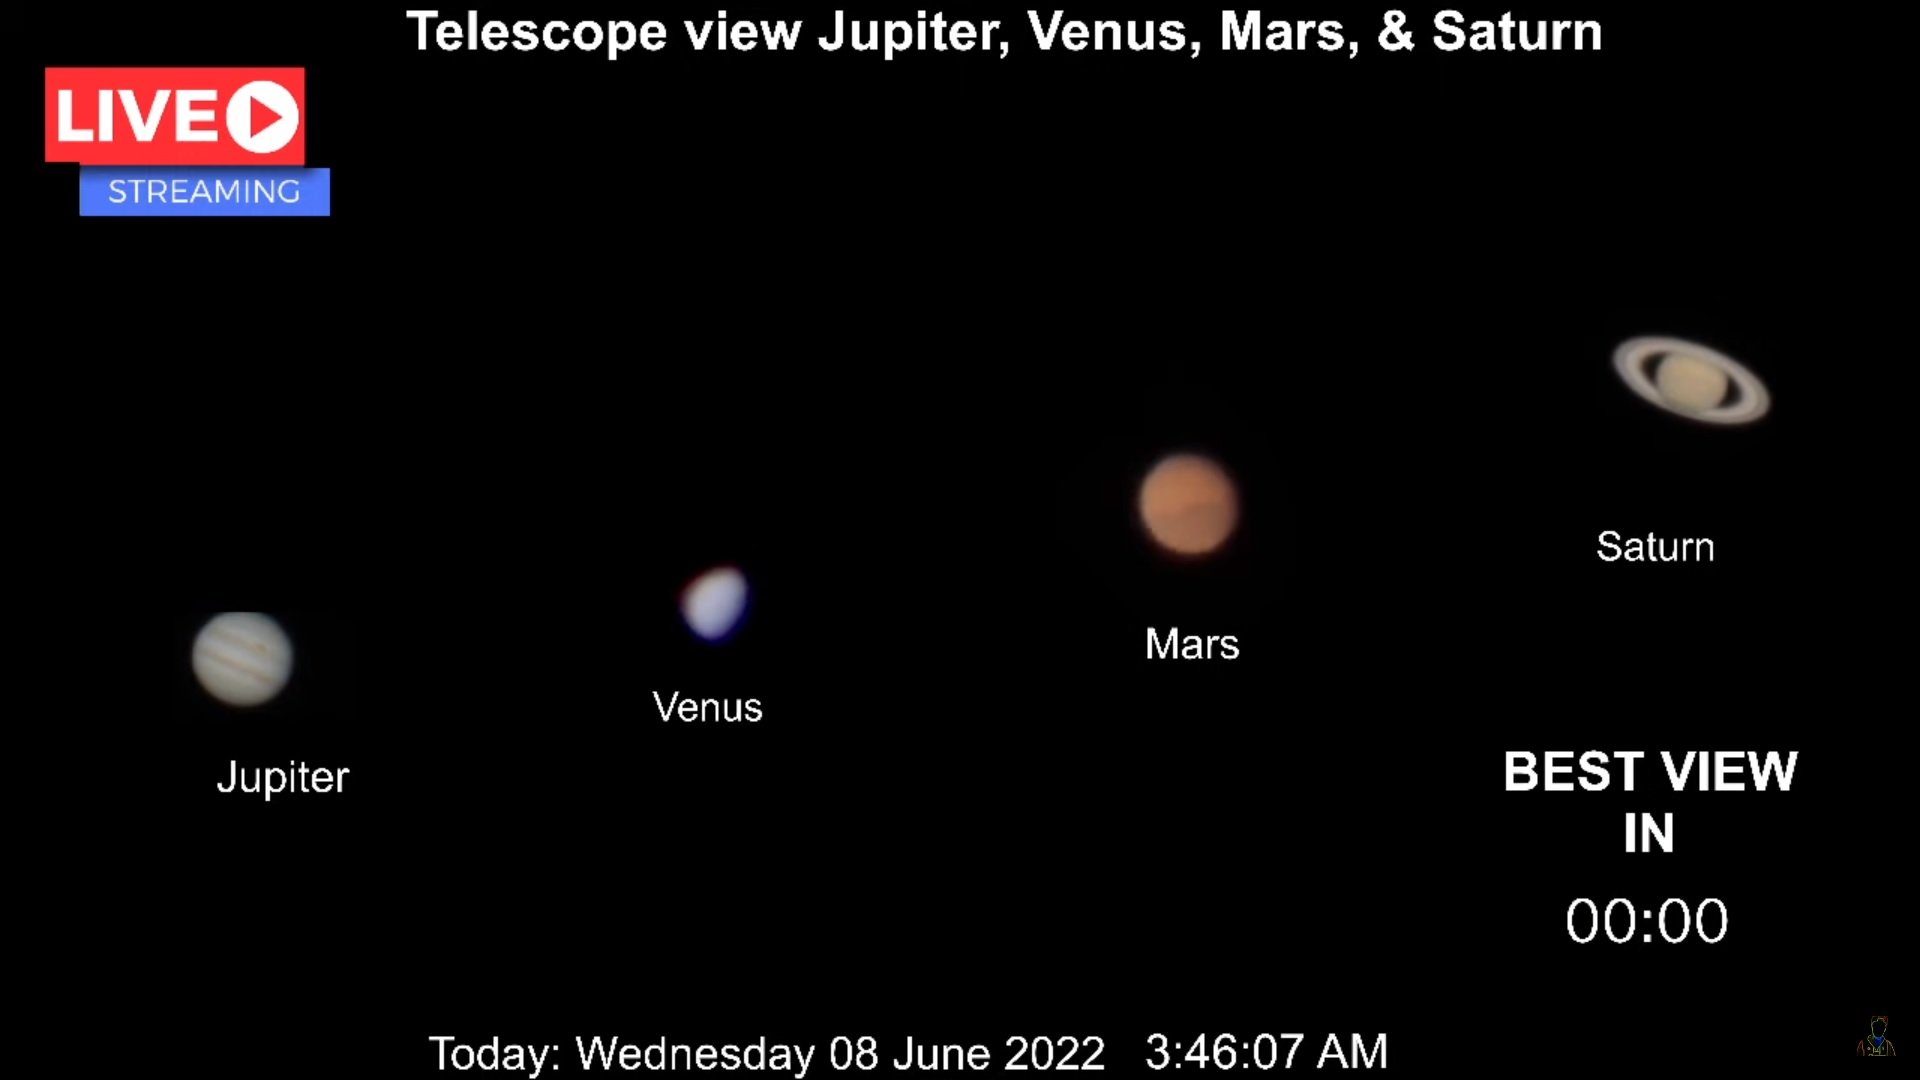 LIVE Telescope view of Jupiter, Venus, Mars, & Saturn | Tesla Motors Club